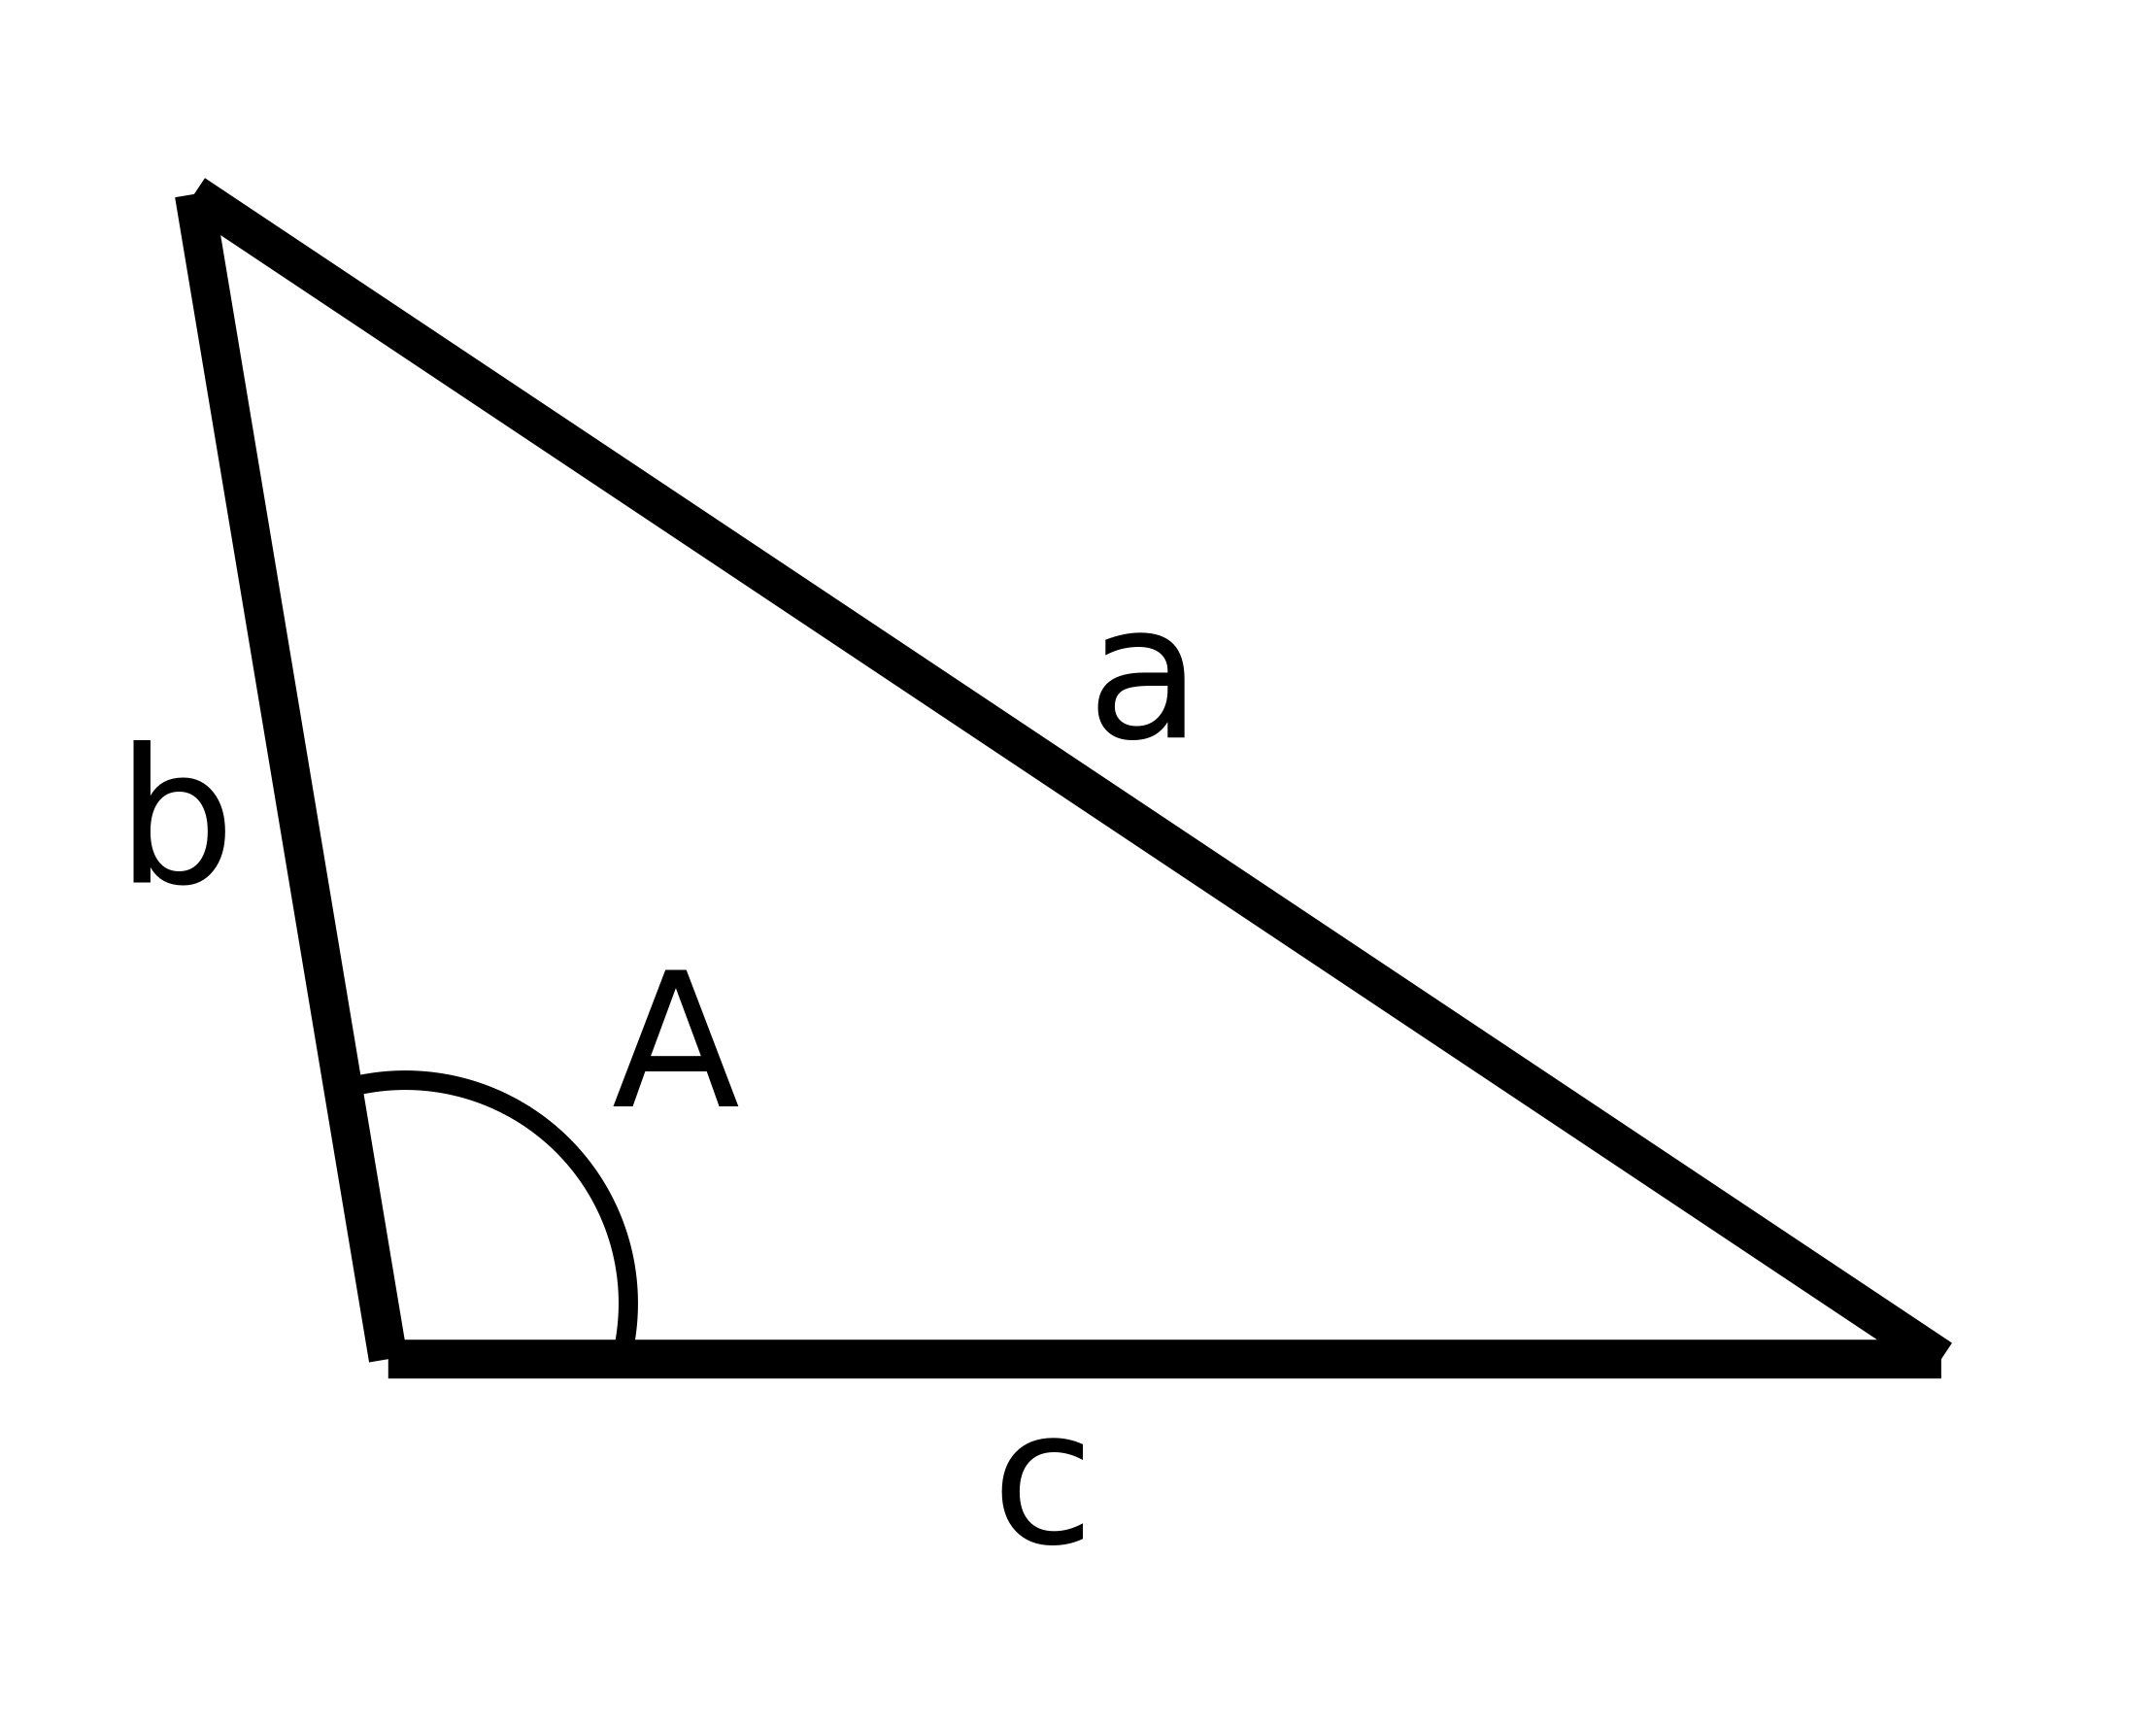 En rtvinklig triangel